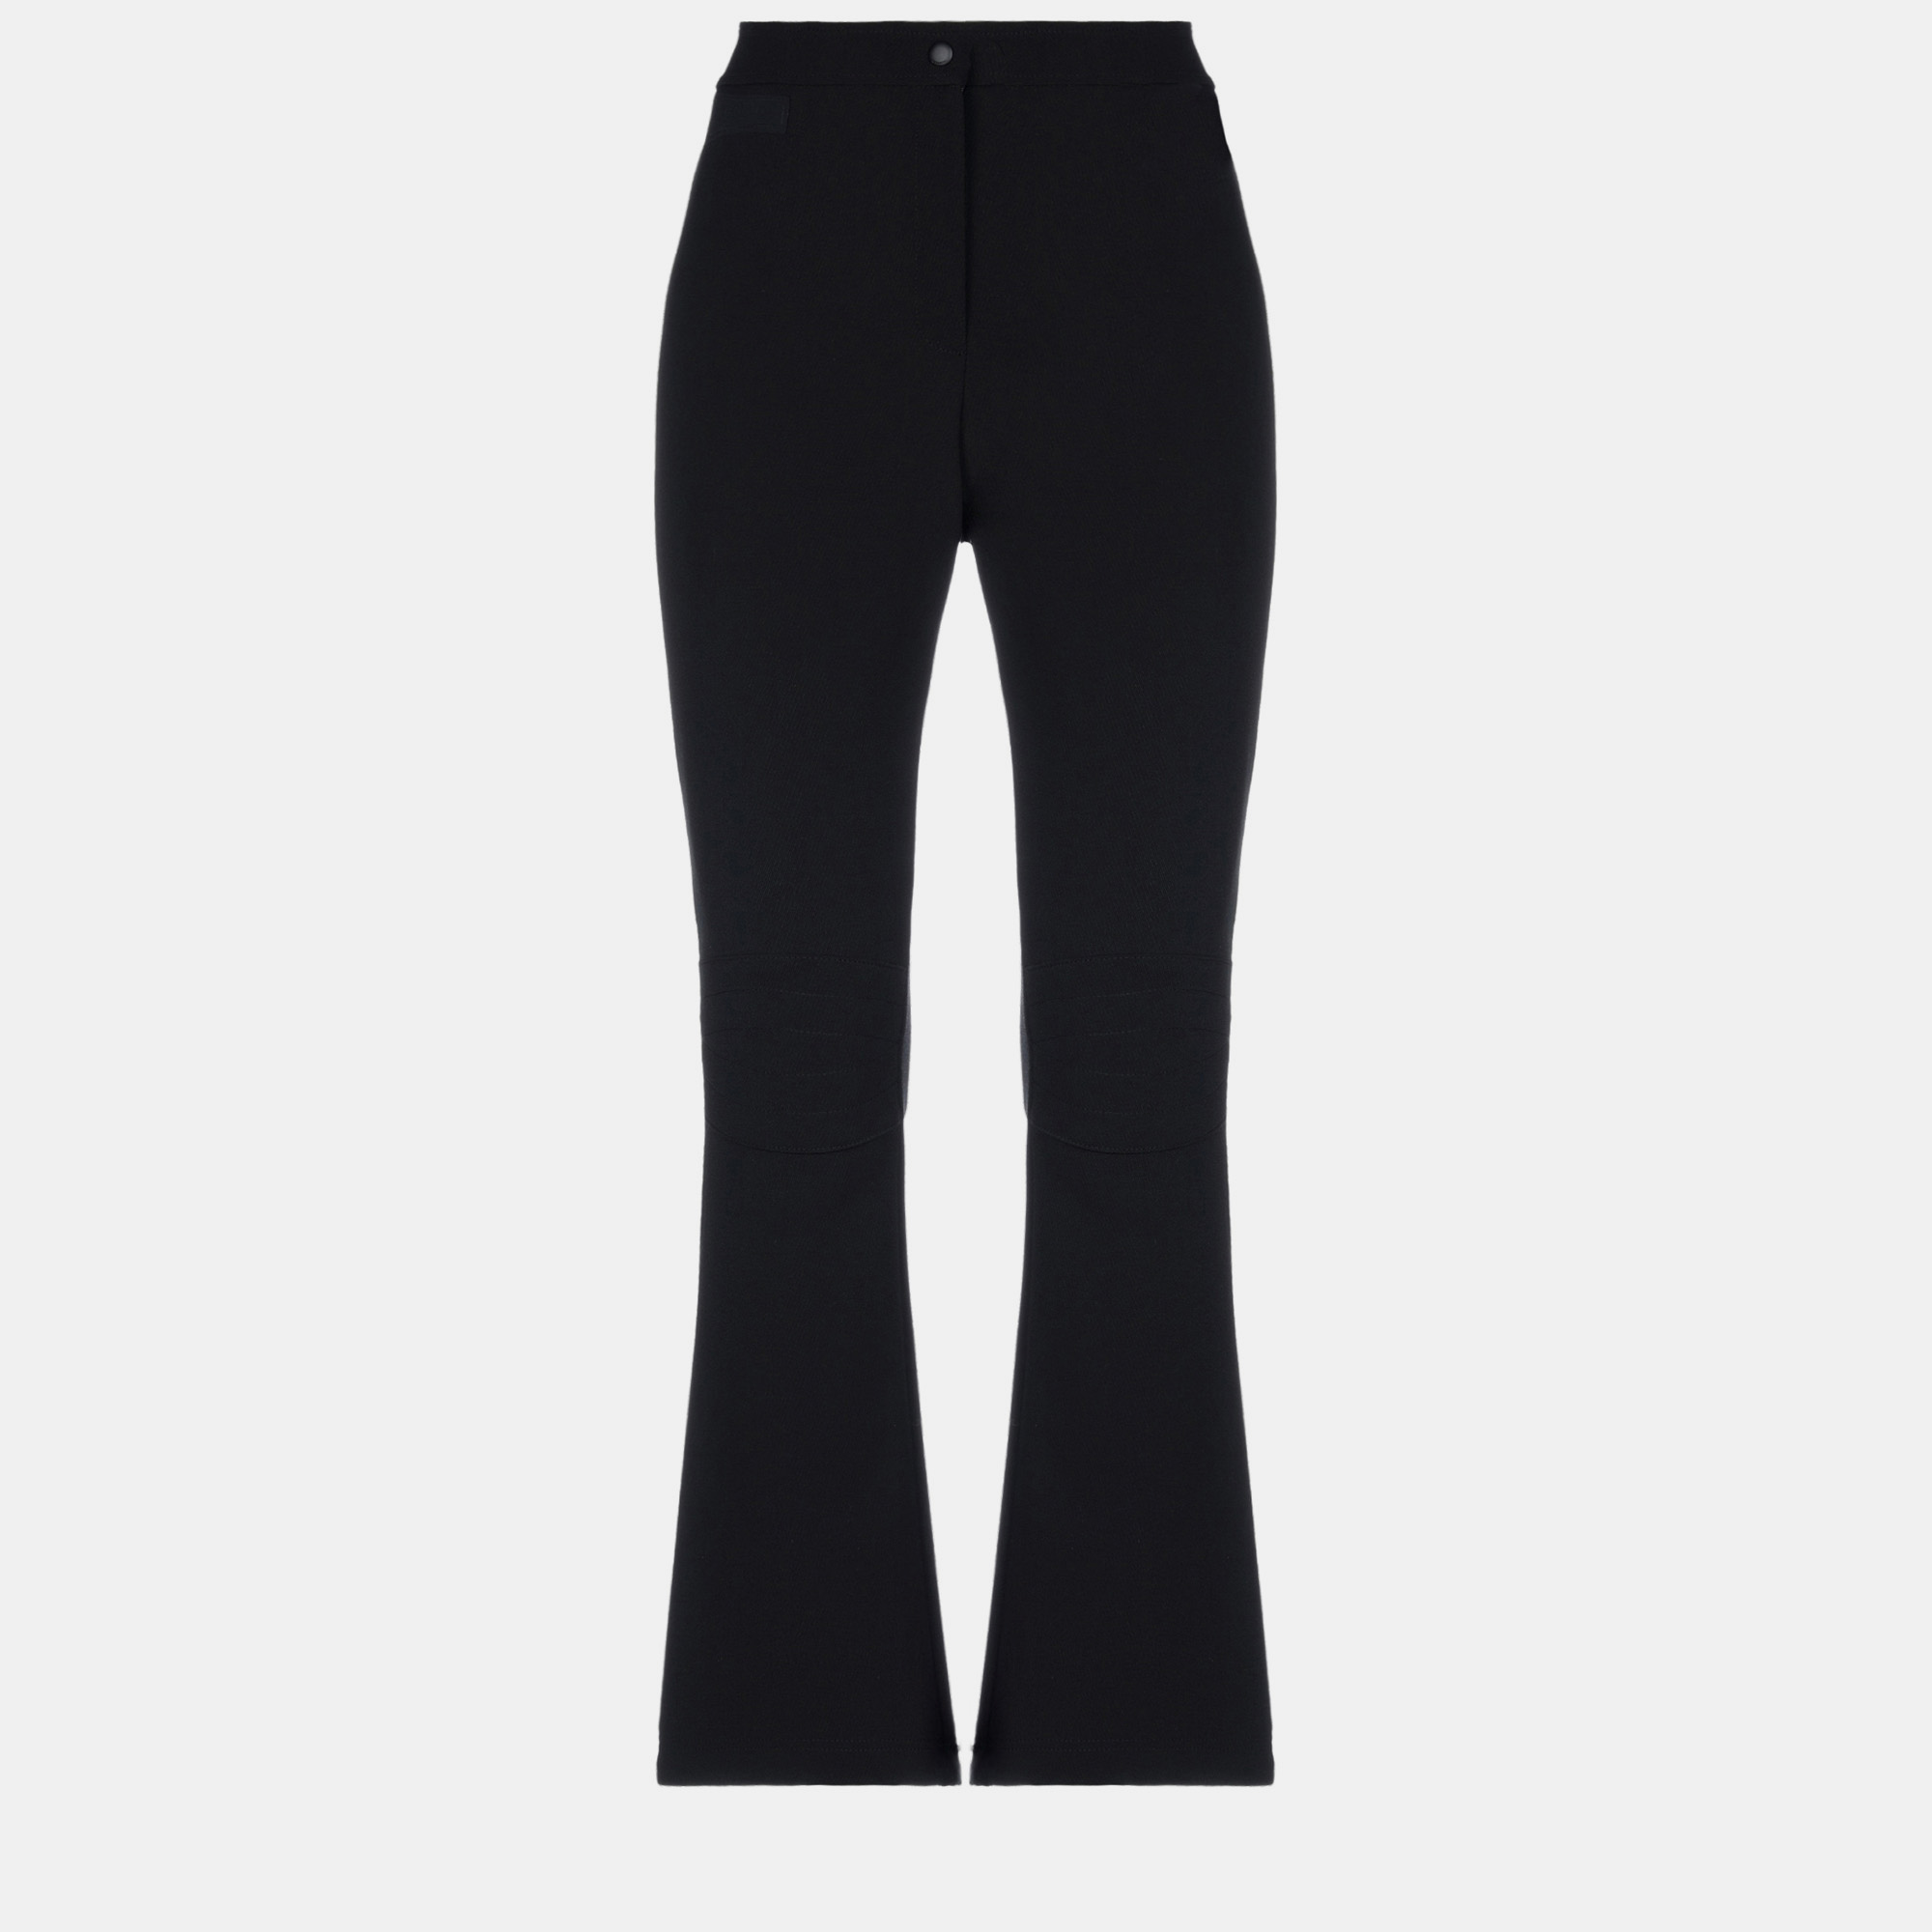 Givenchy polyester pants 38